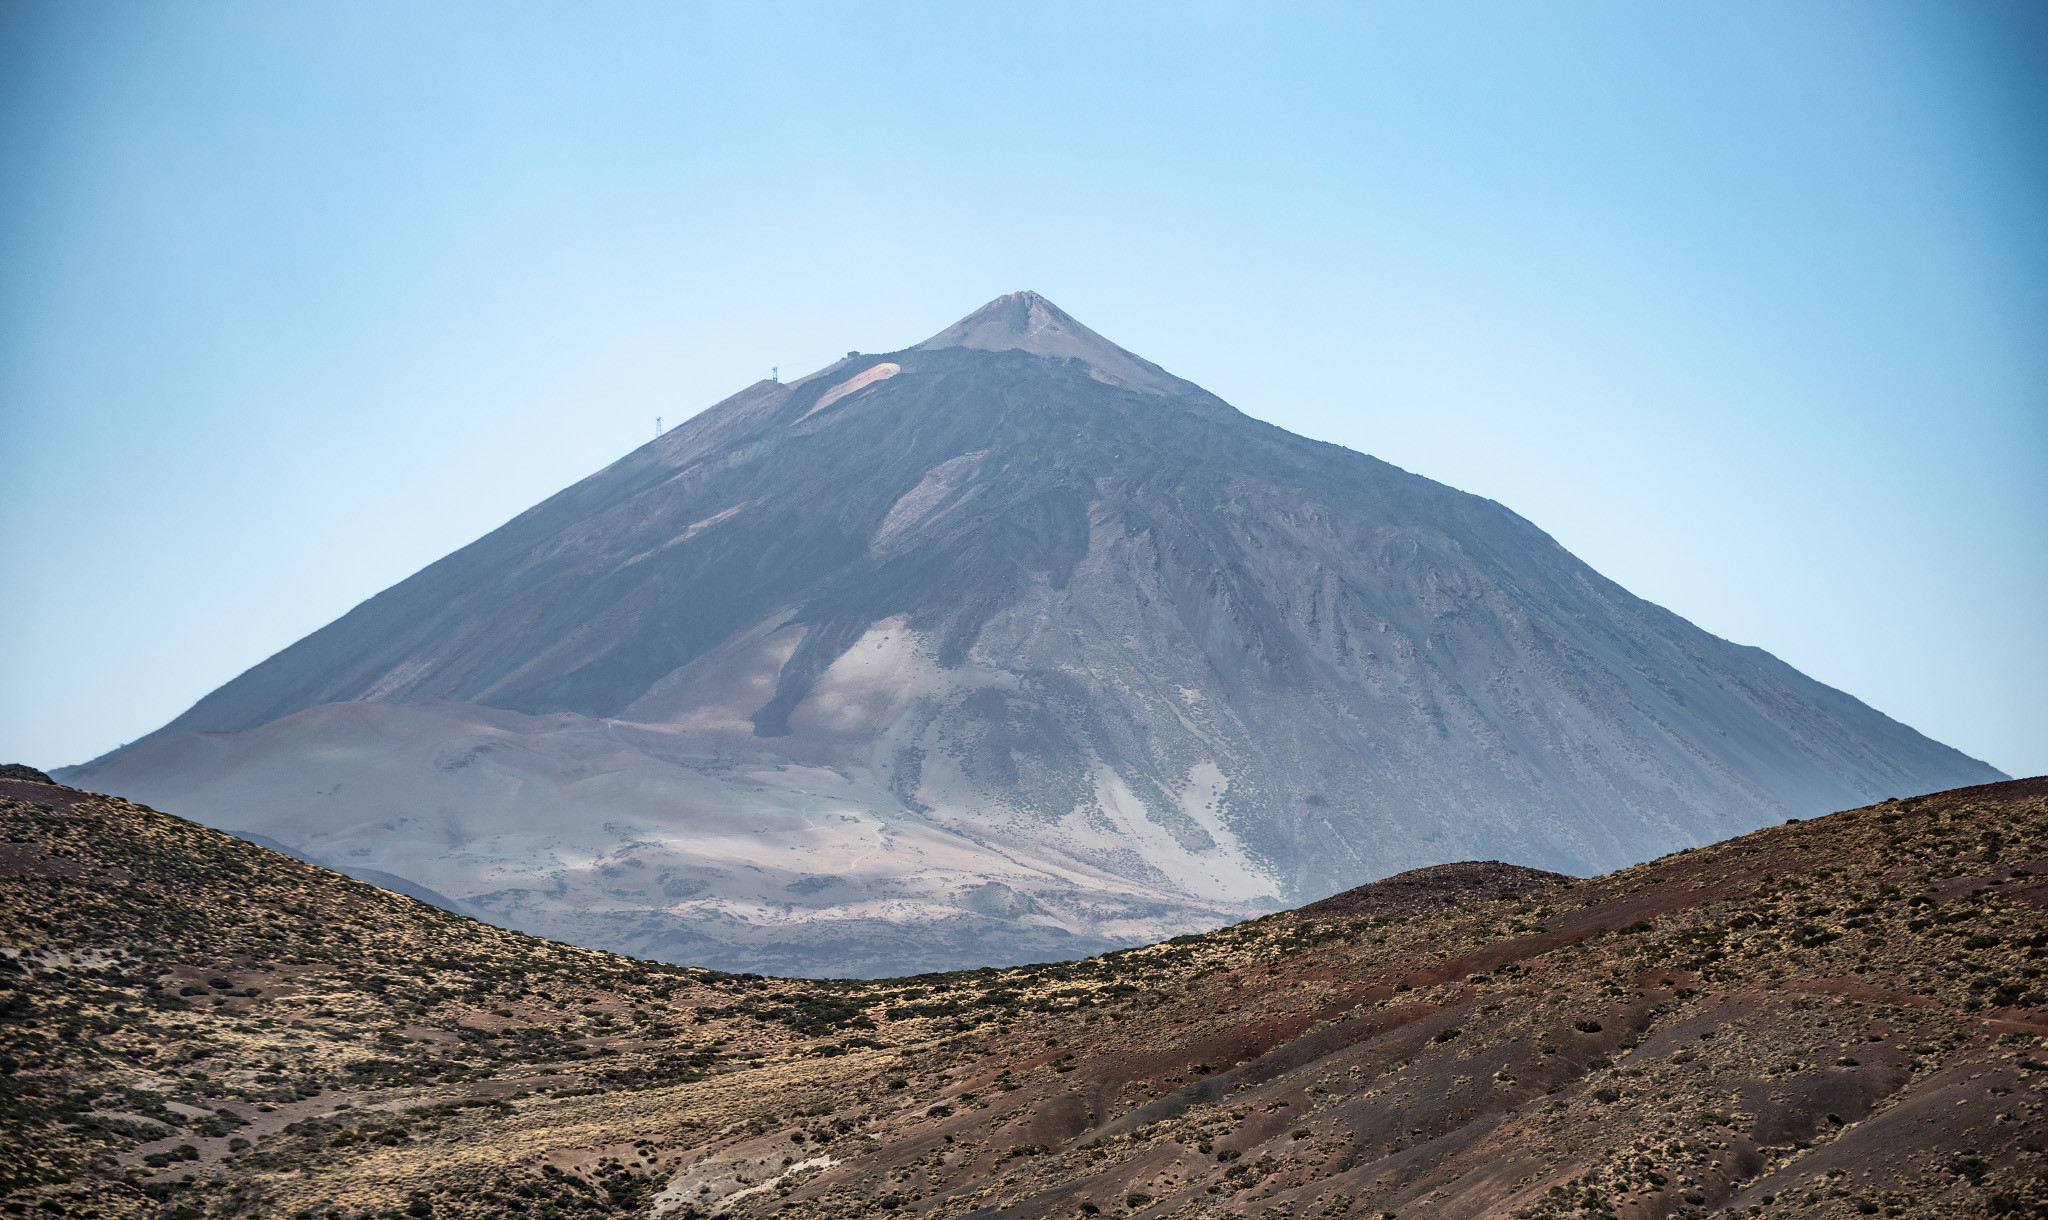 Pico del Teide (3718 m) • Peakbook